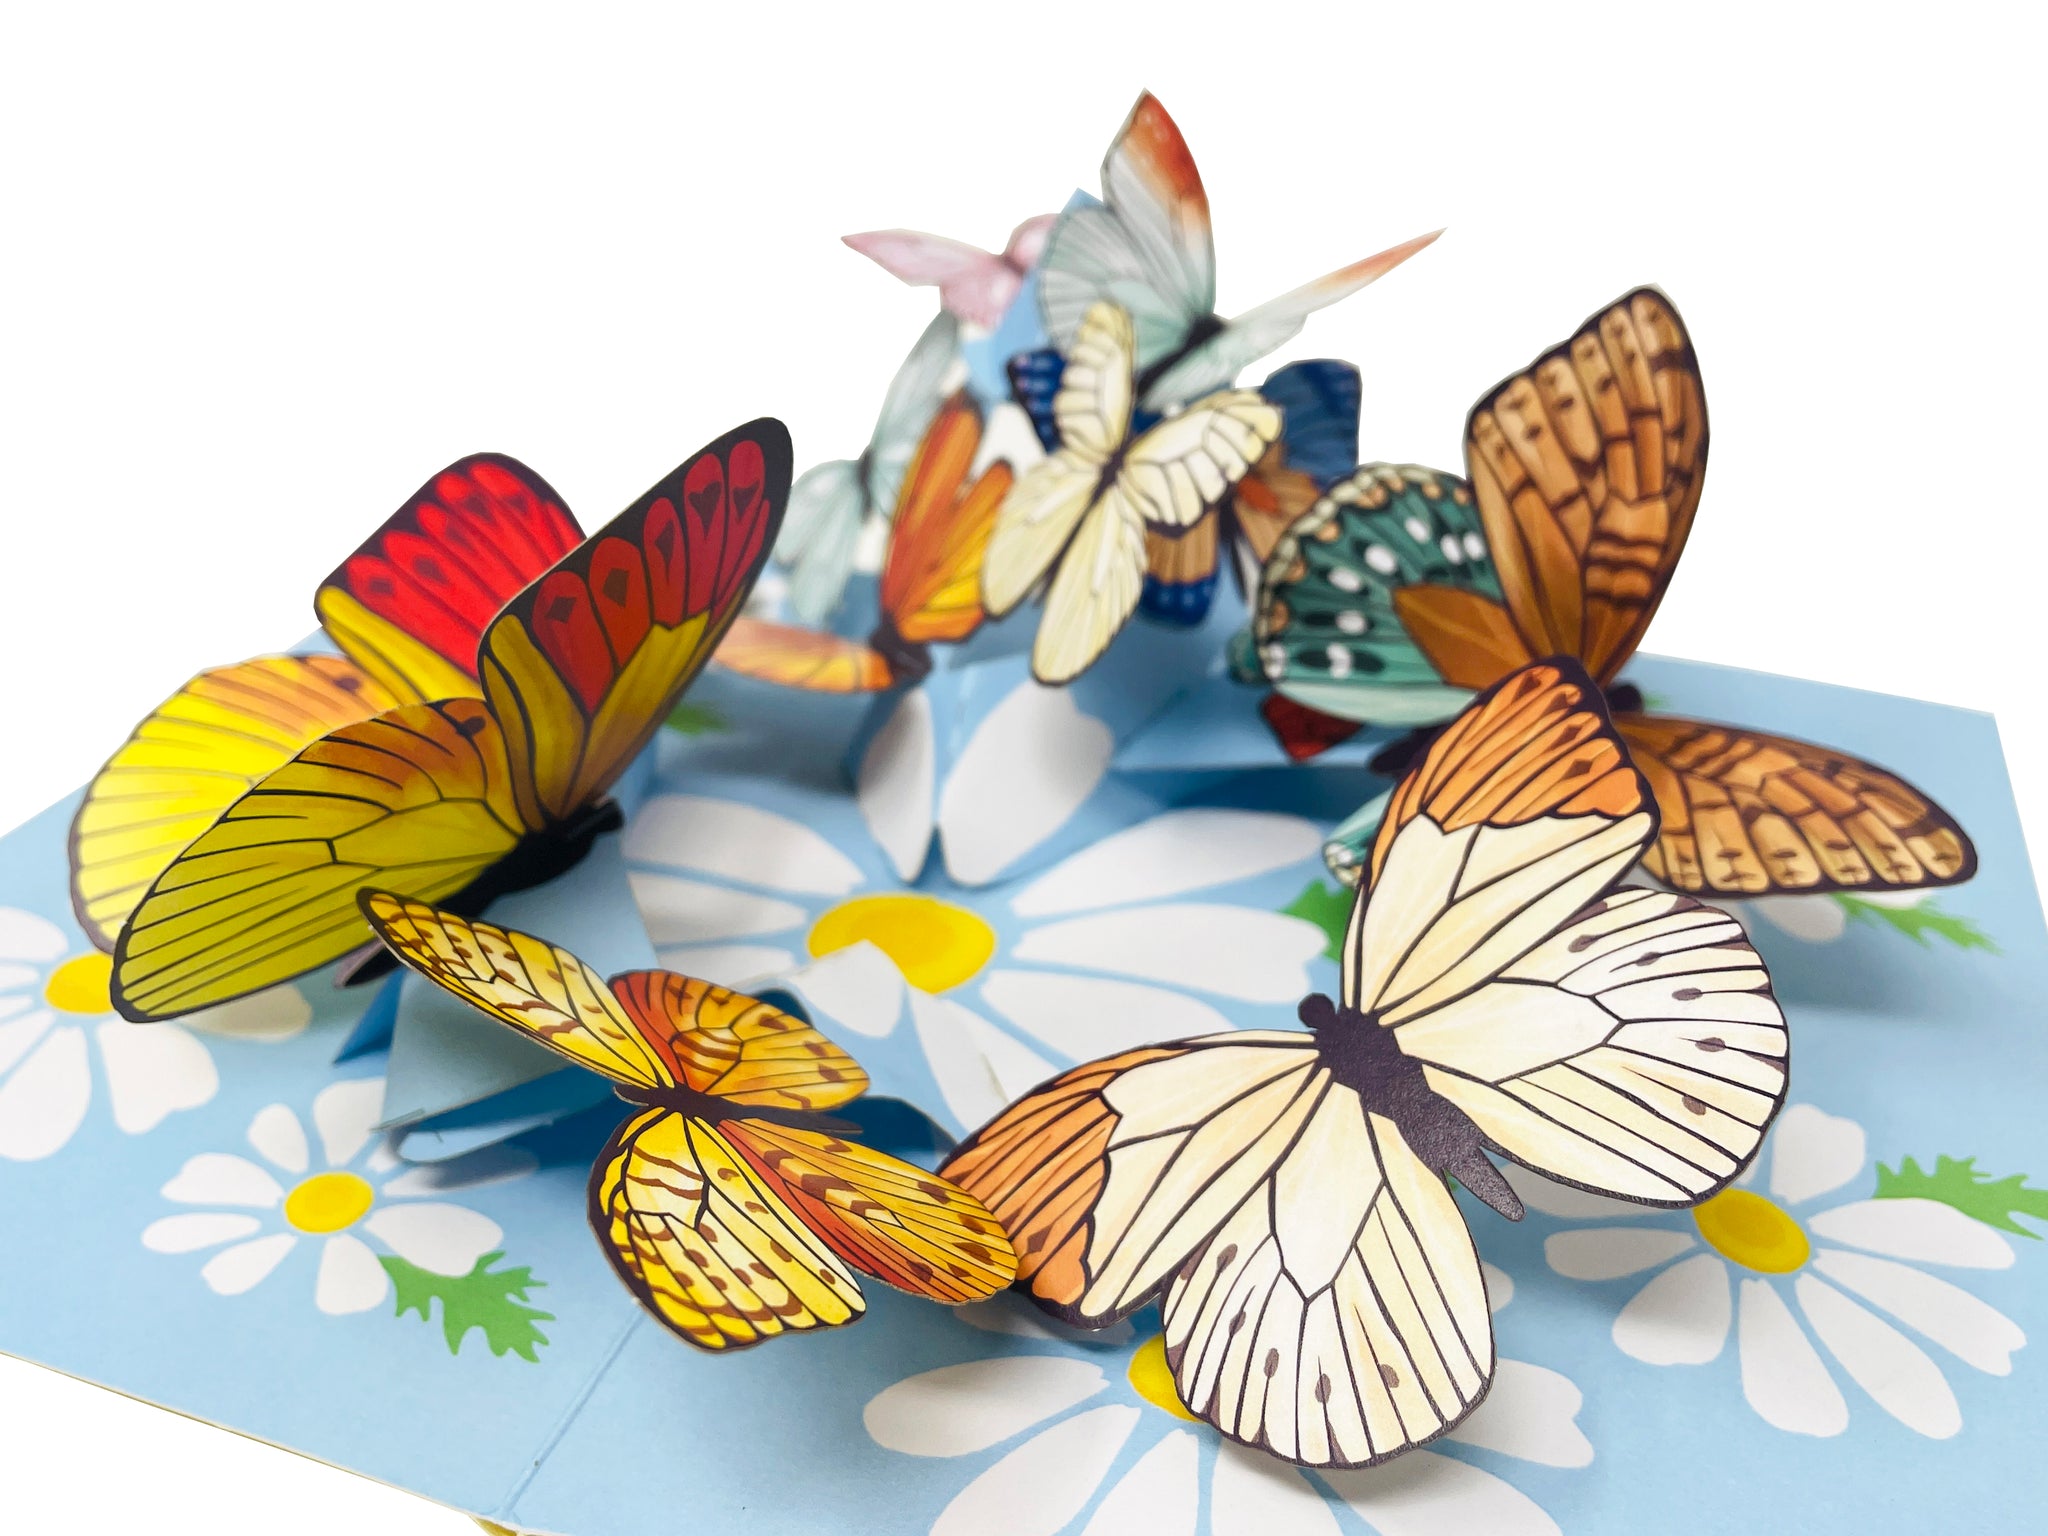 Butterfly Pop up Card, Butterfly 3D card, Blue Morpho Butterfly